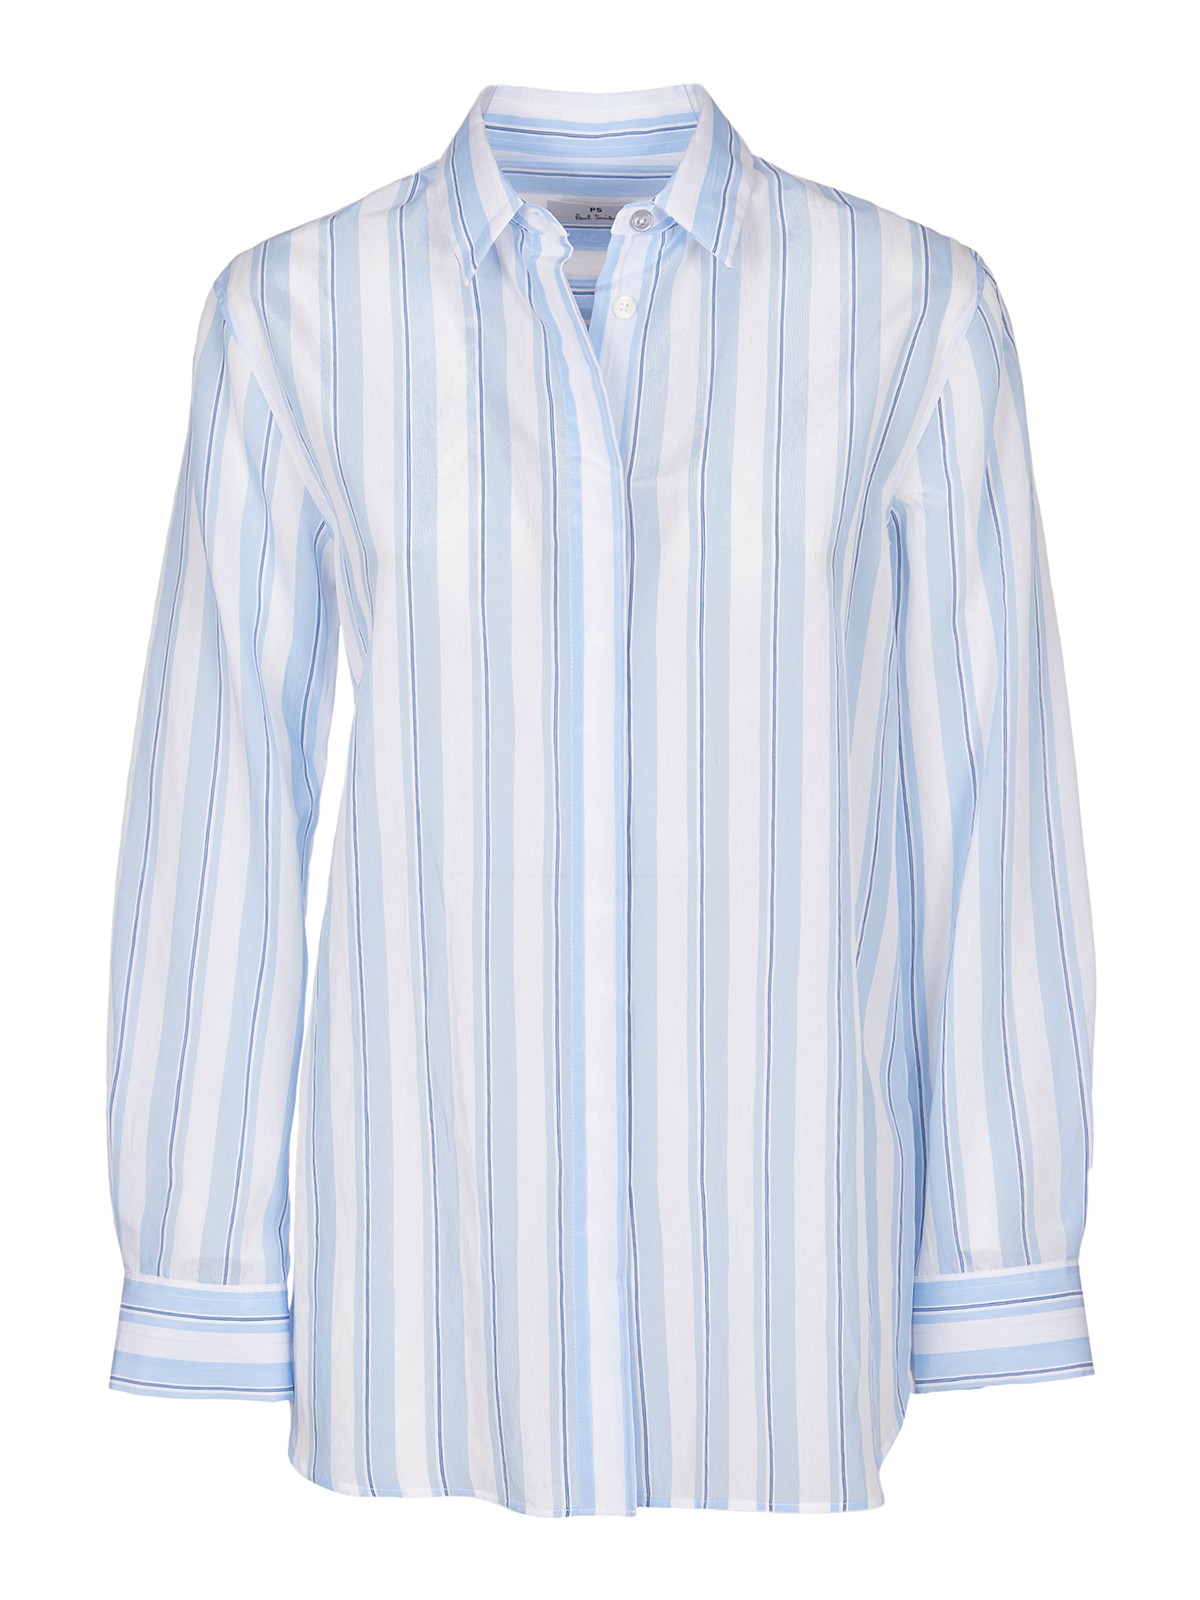 Shirts Paul Smith - Striped shirt - W2R303BH3089201 | Shop online at iKRIX